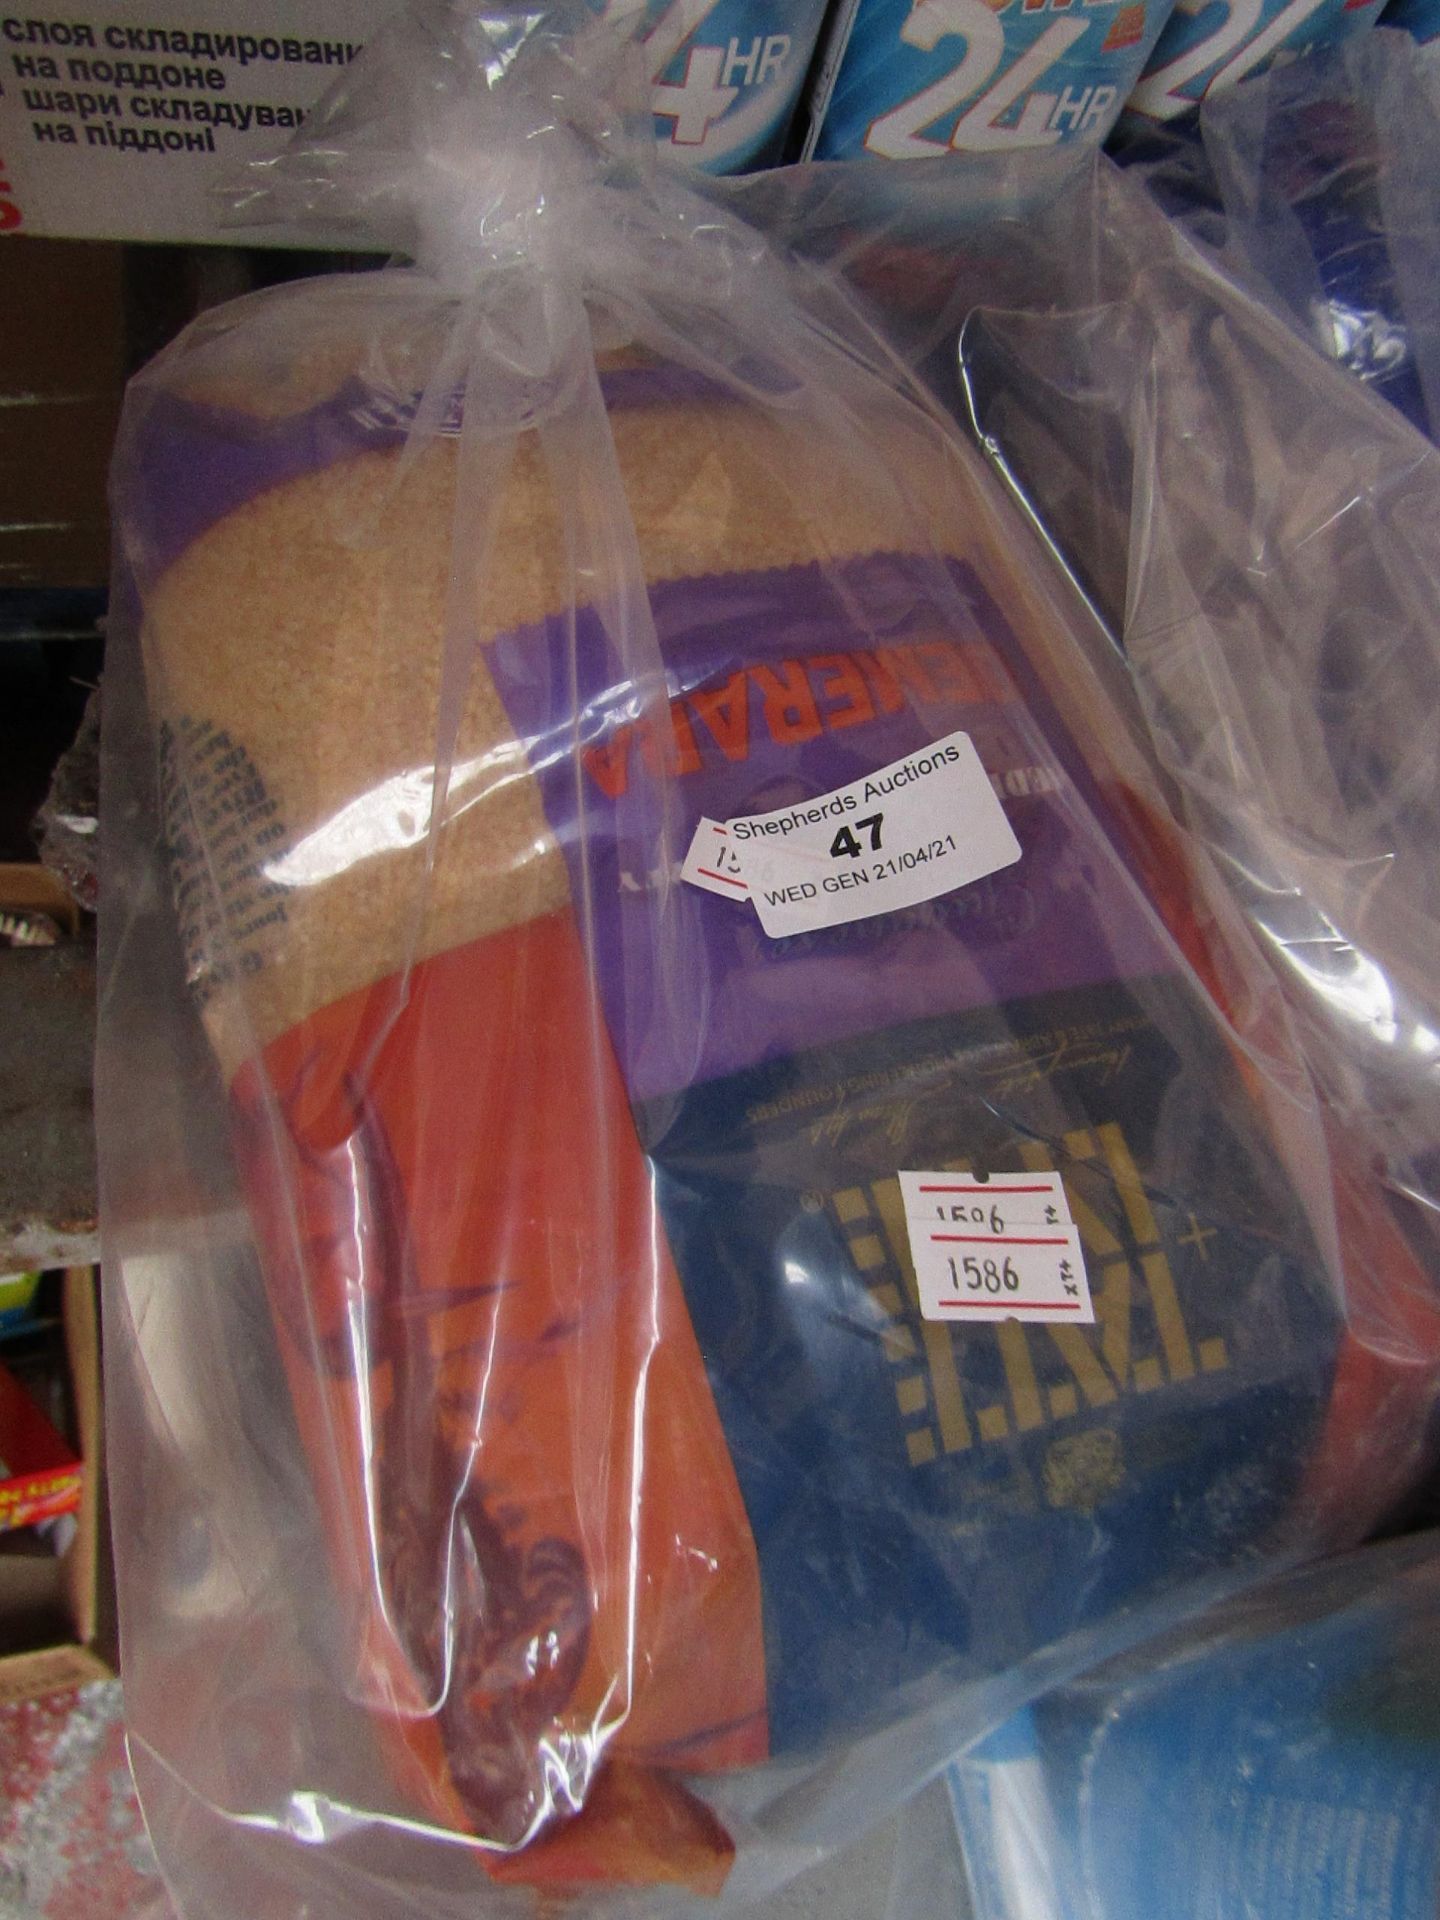 3KG bag of Tate and Lyle Demerara sugar, it has been damged and rebagged.